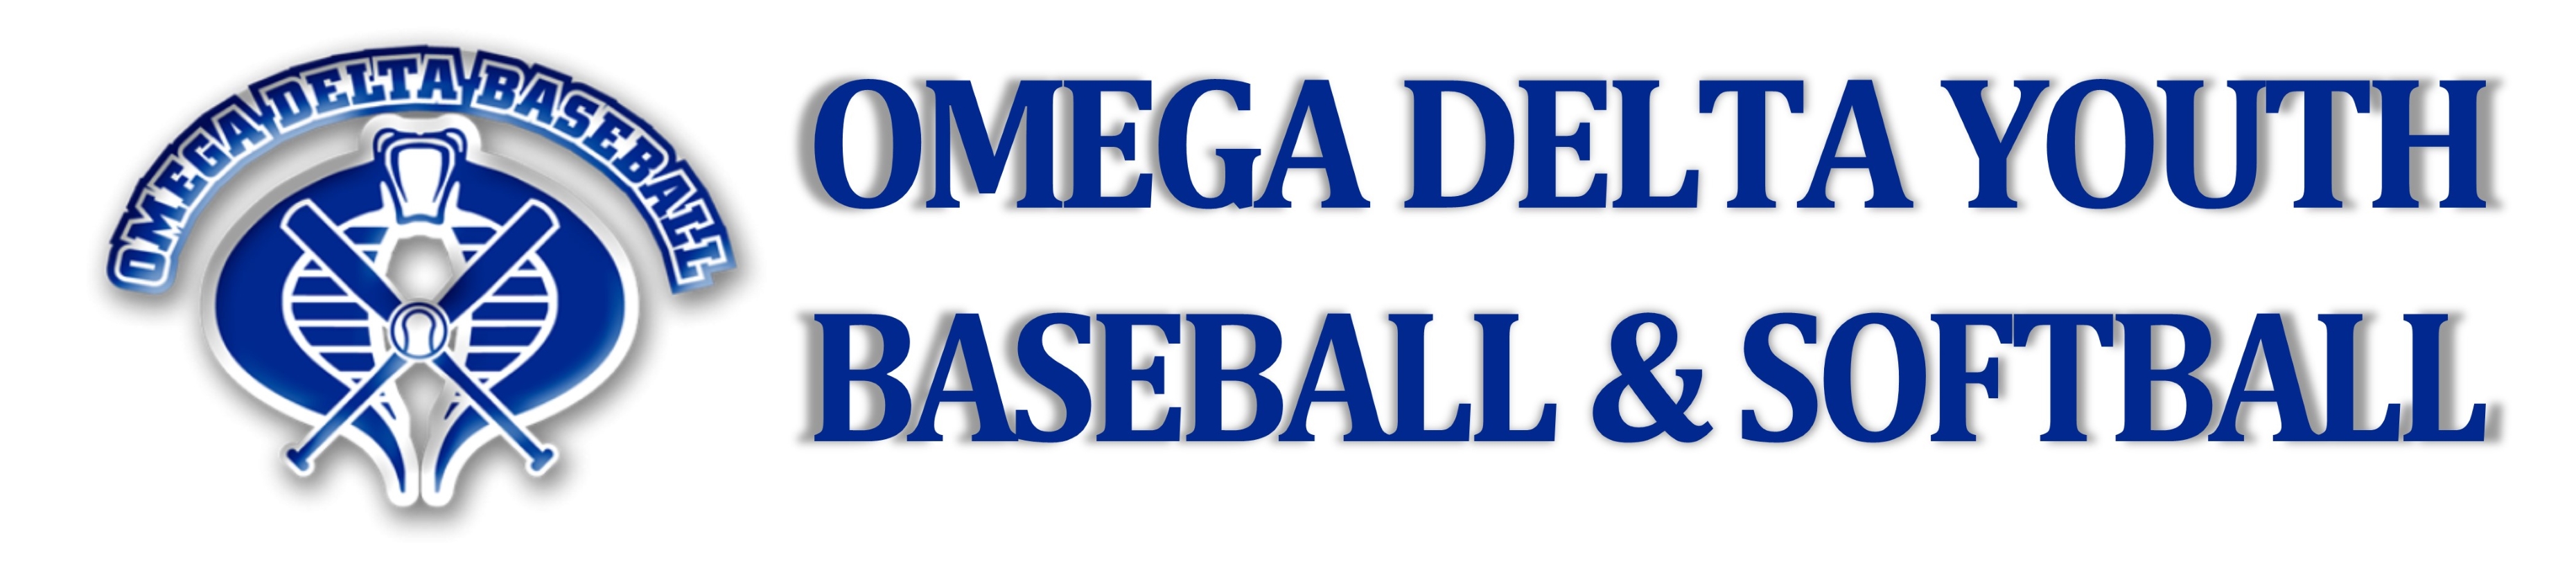 Omega Delta Youth Baseball & Softball League